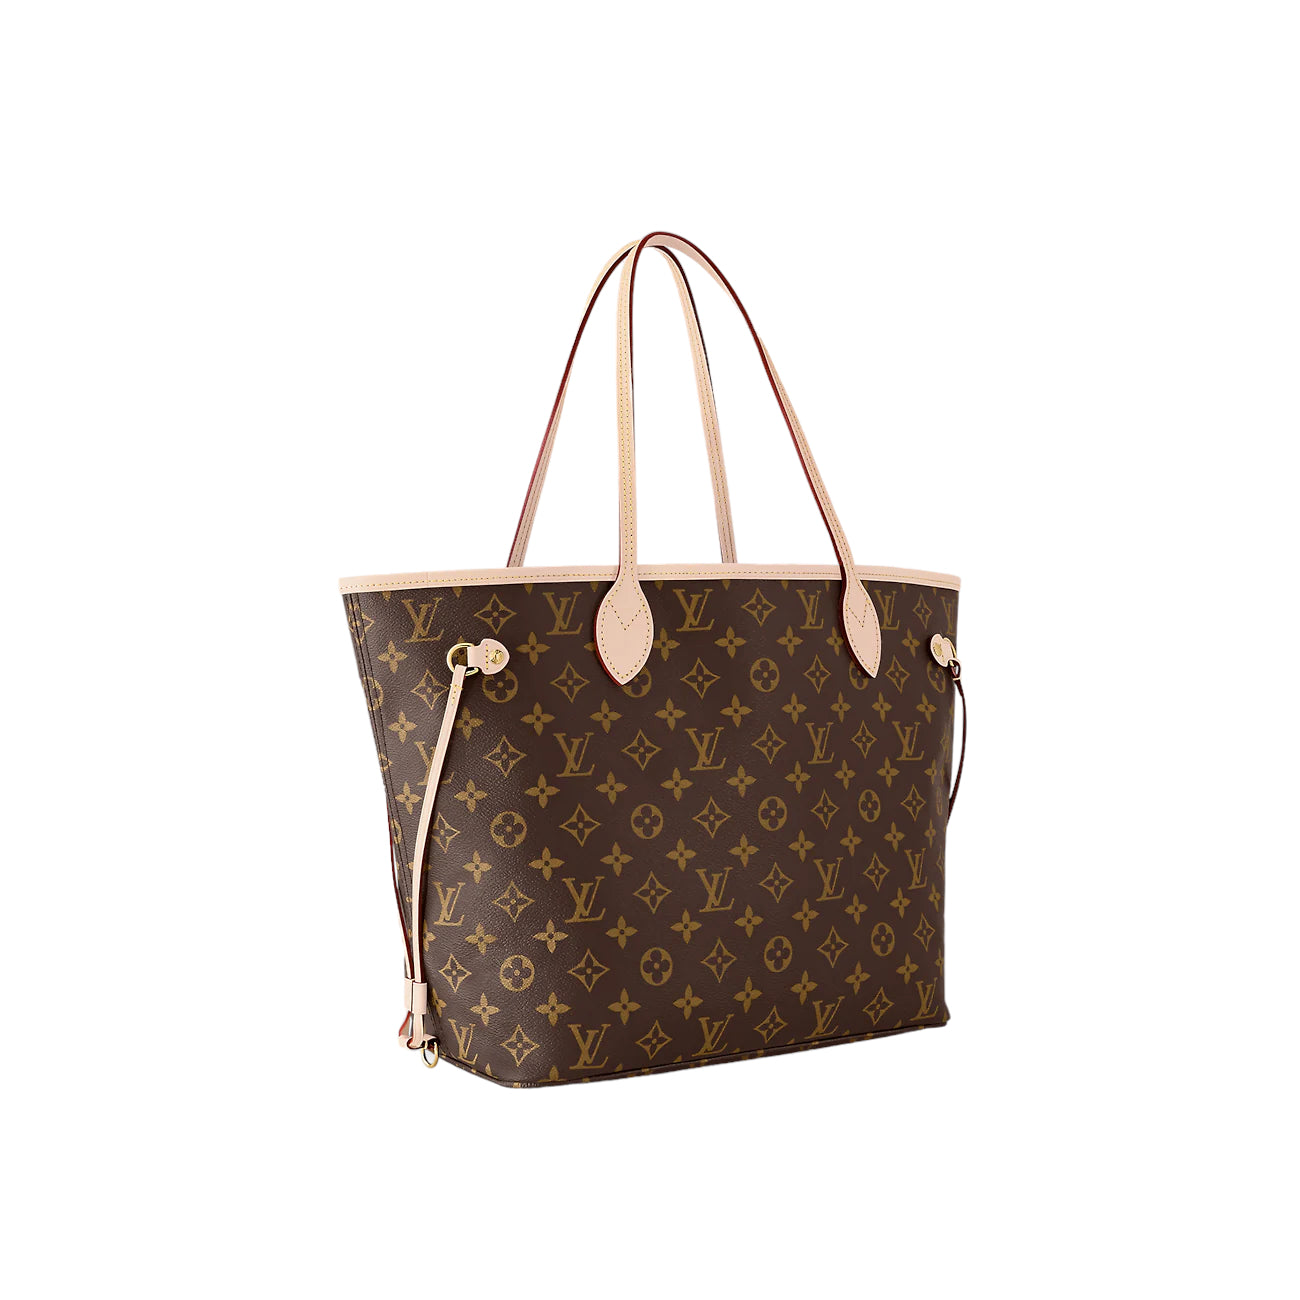 Louis Vuitton Neverfull MM Monogram Bags Handbags Purse (Beige